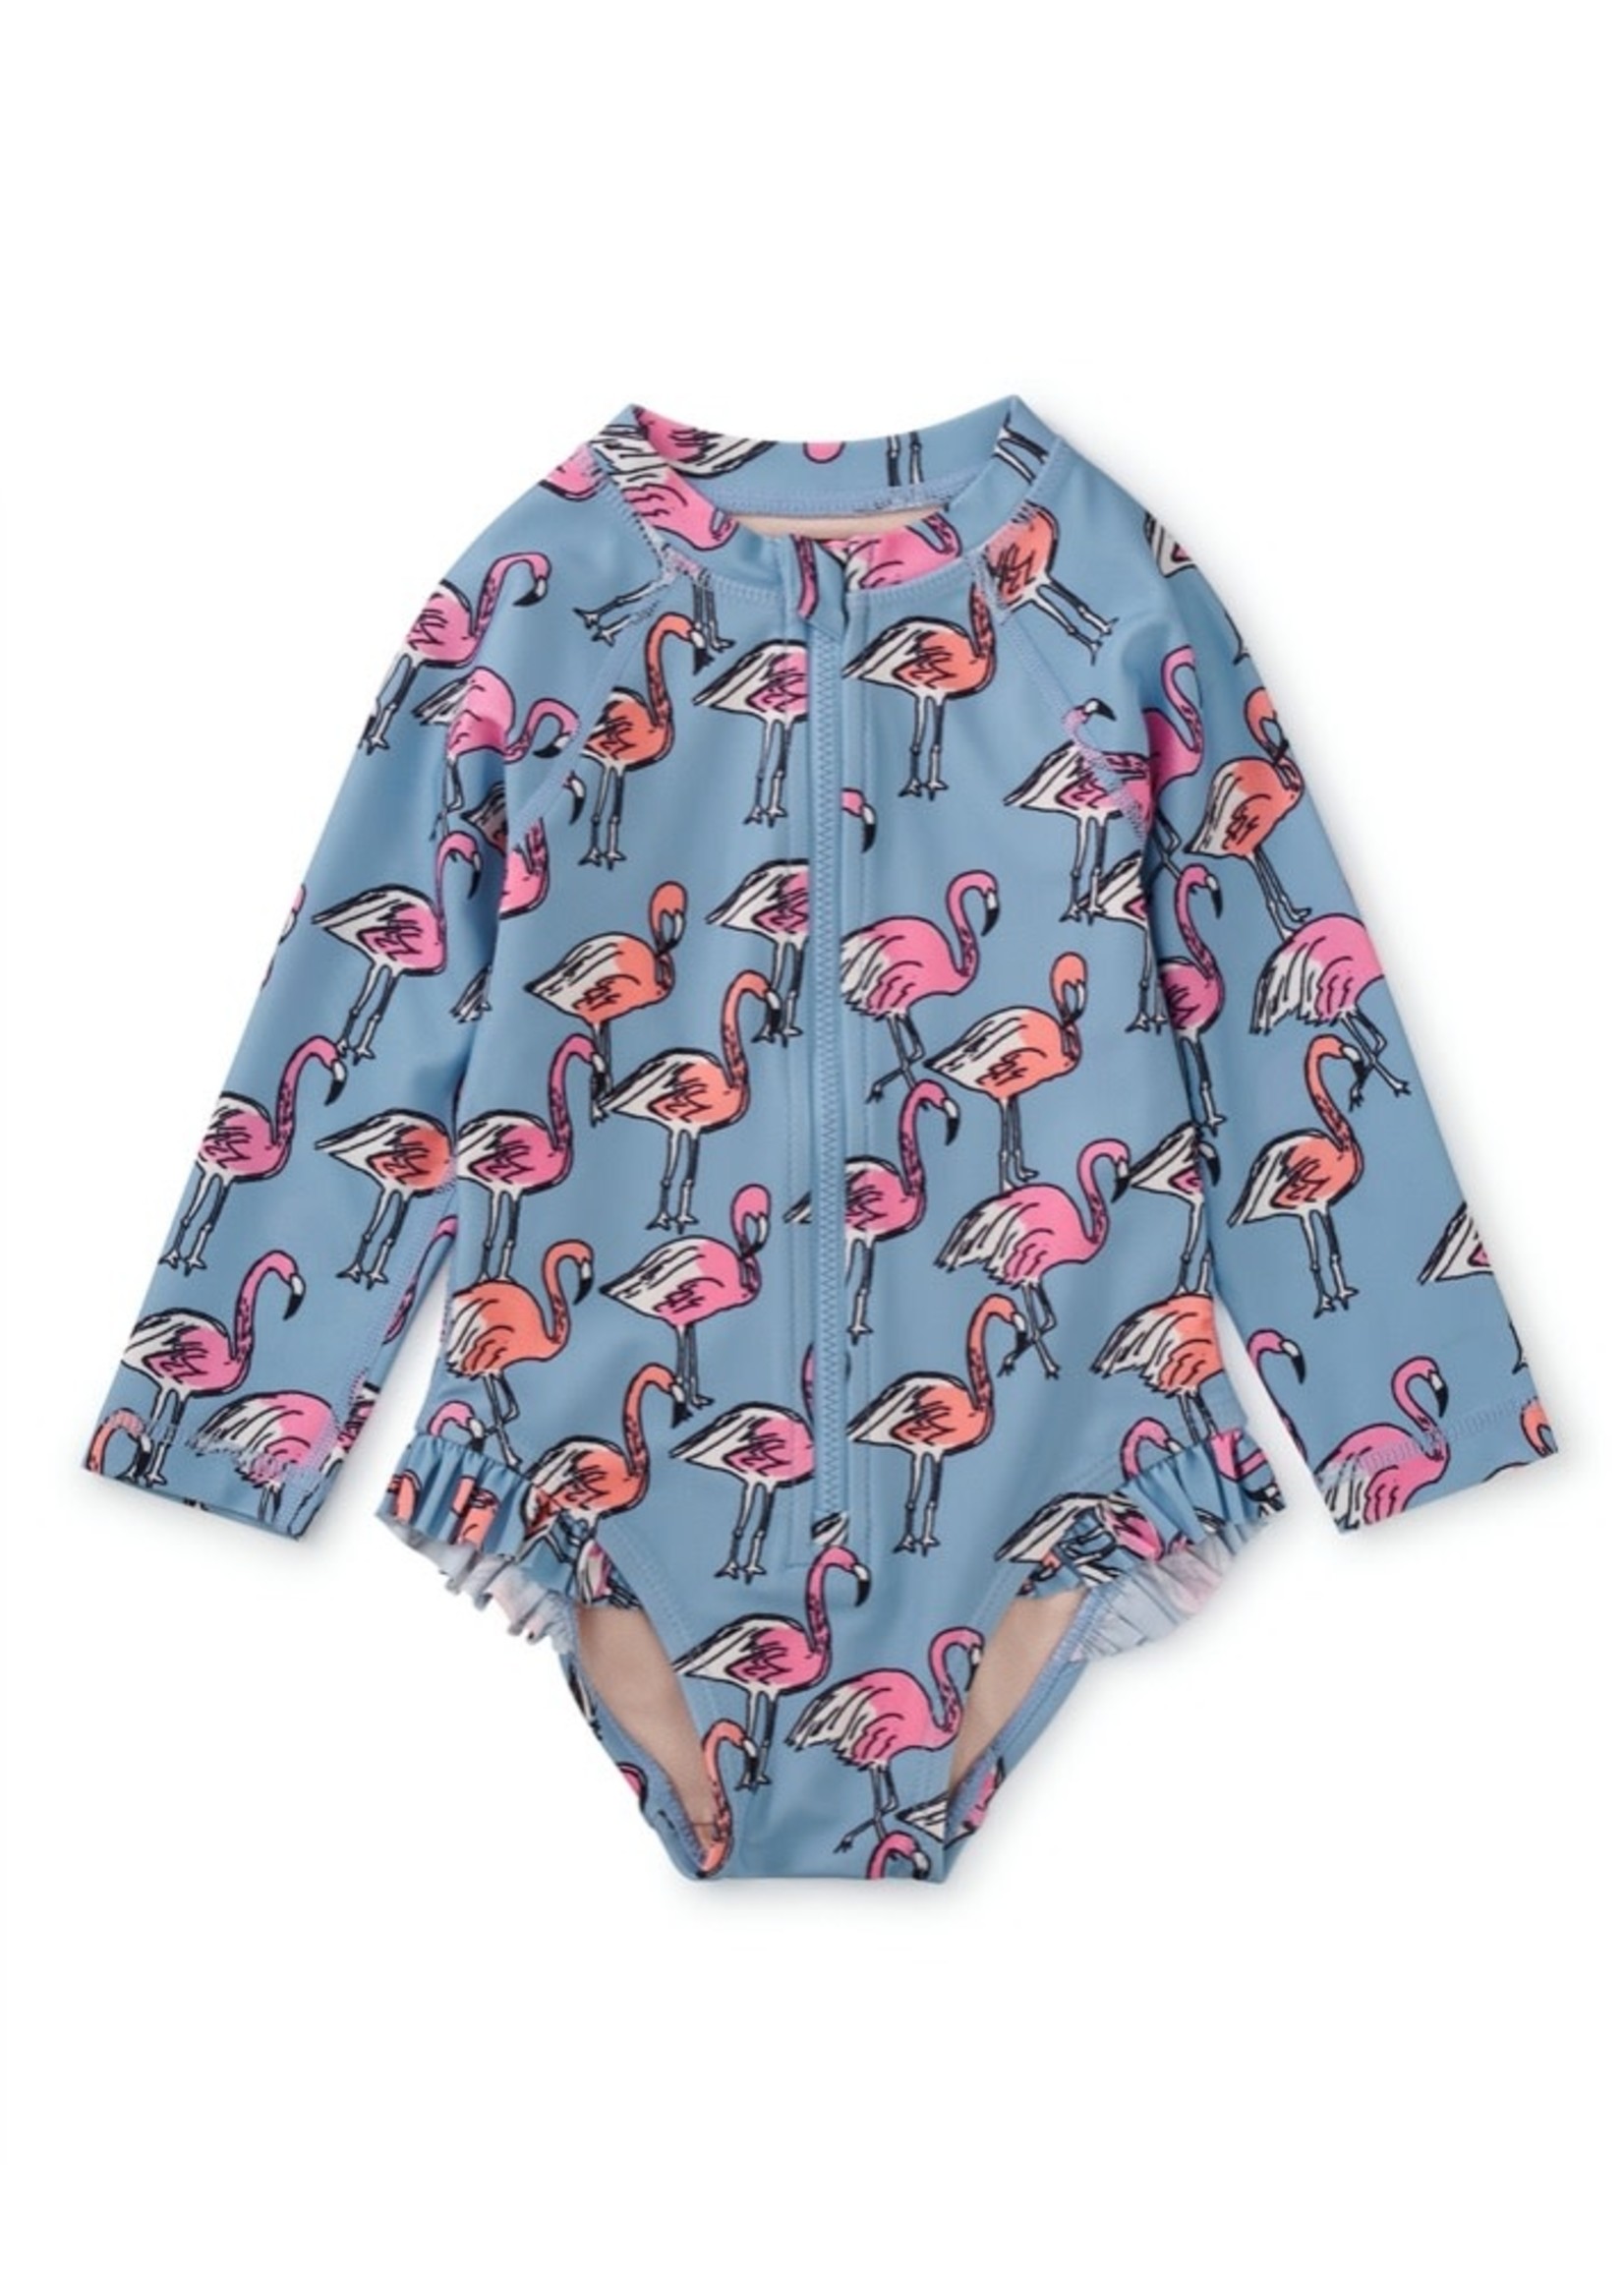 Tea Collection Tea Collection, Fabulous Flamingos Rash Guard Baby Swimsuit